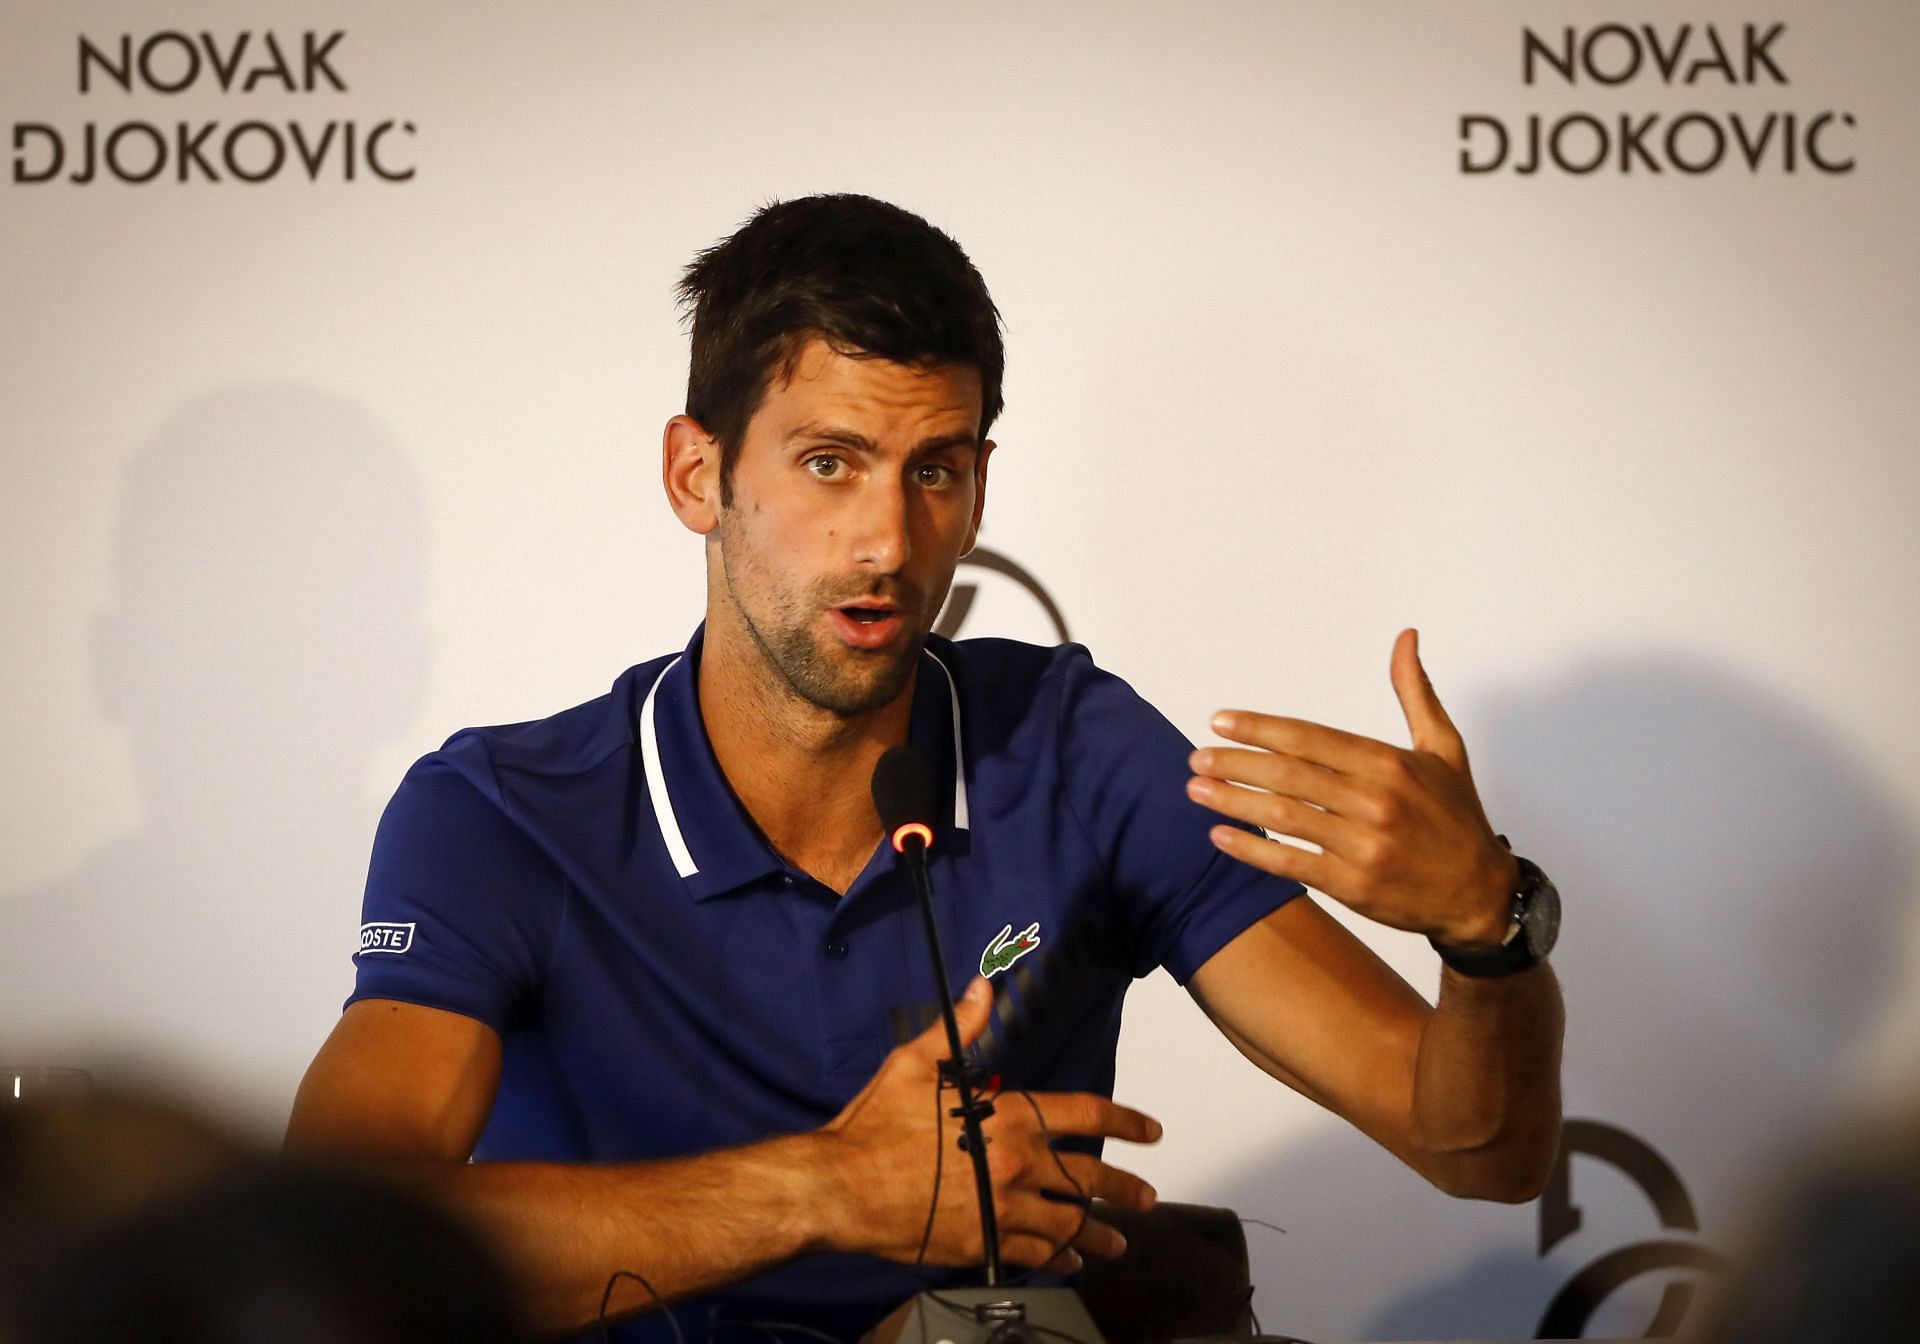 Djokovic at the Novak Tennis Center